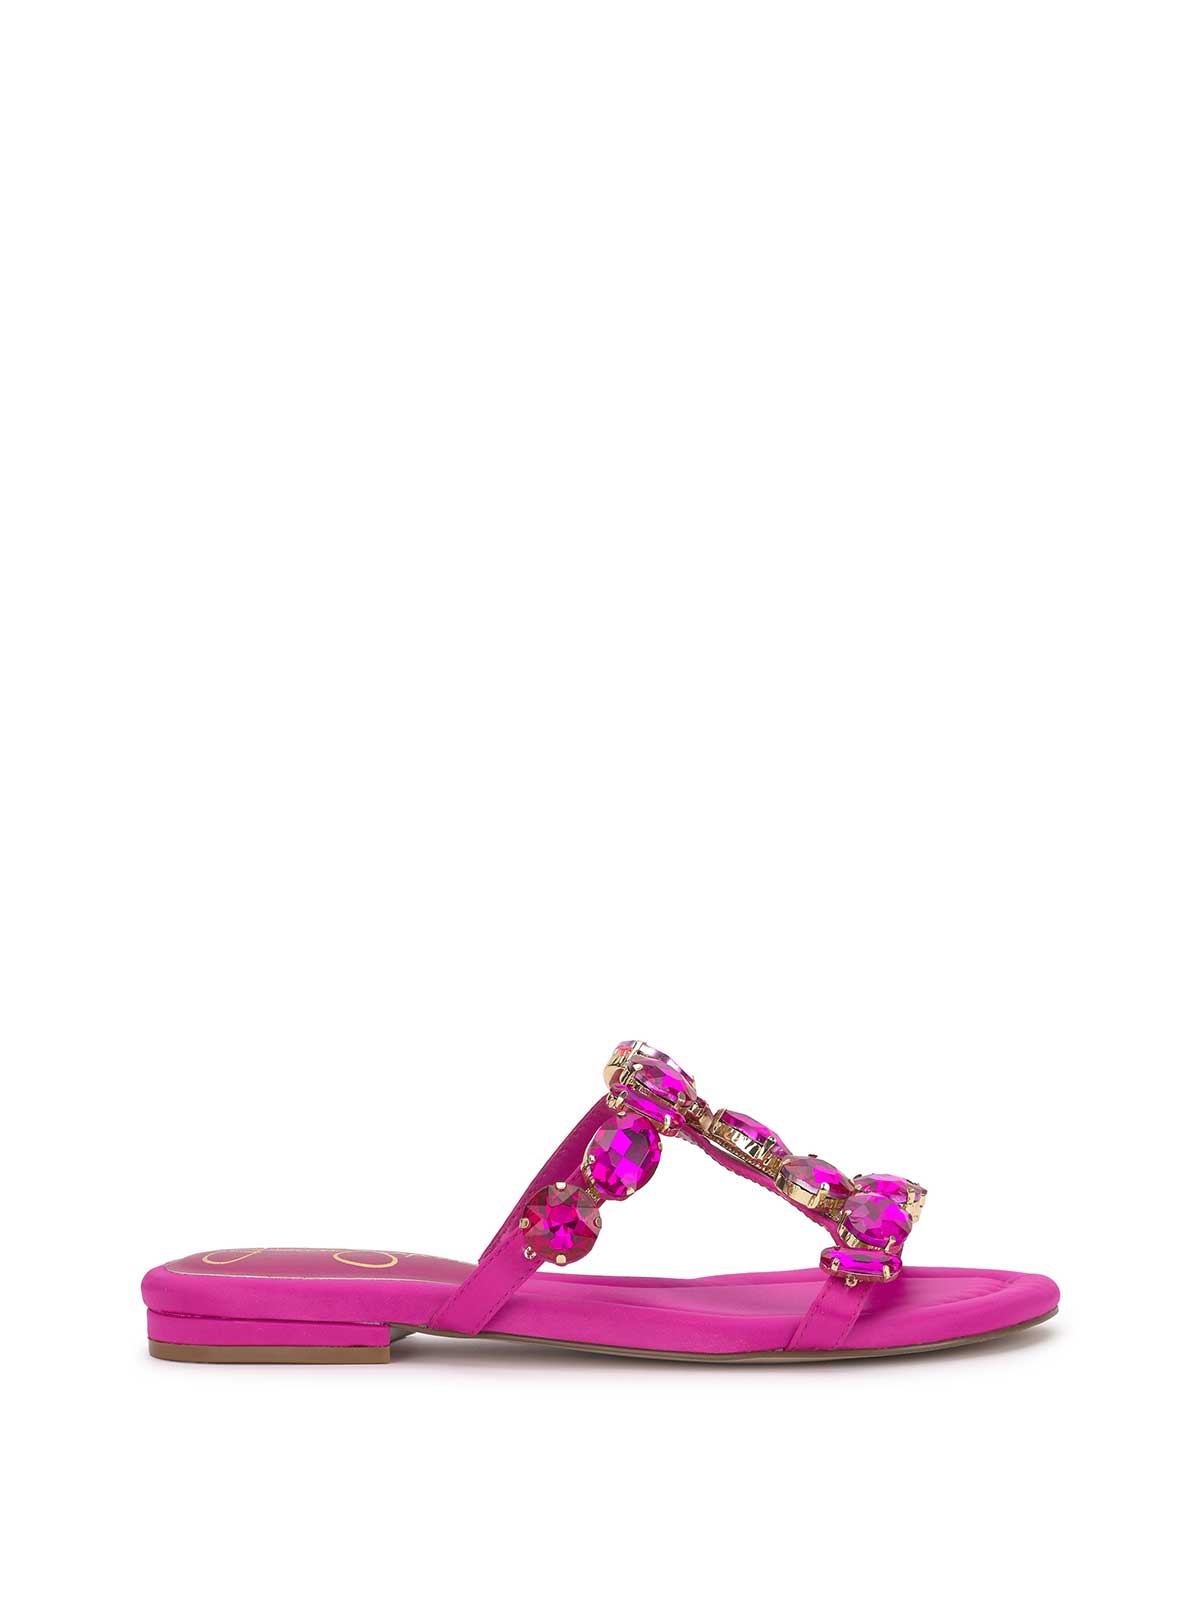 Metallic Fuchsia Slide Sandals, Bright Pink Decorated Slide Sandals,  Women's Leather Sandals, Pink Summer Shoes, Greek Flat Sandals - Etsy